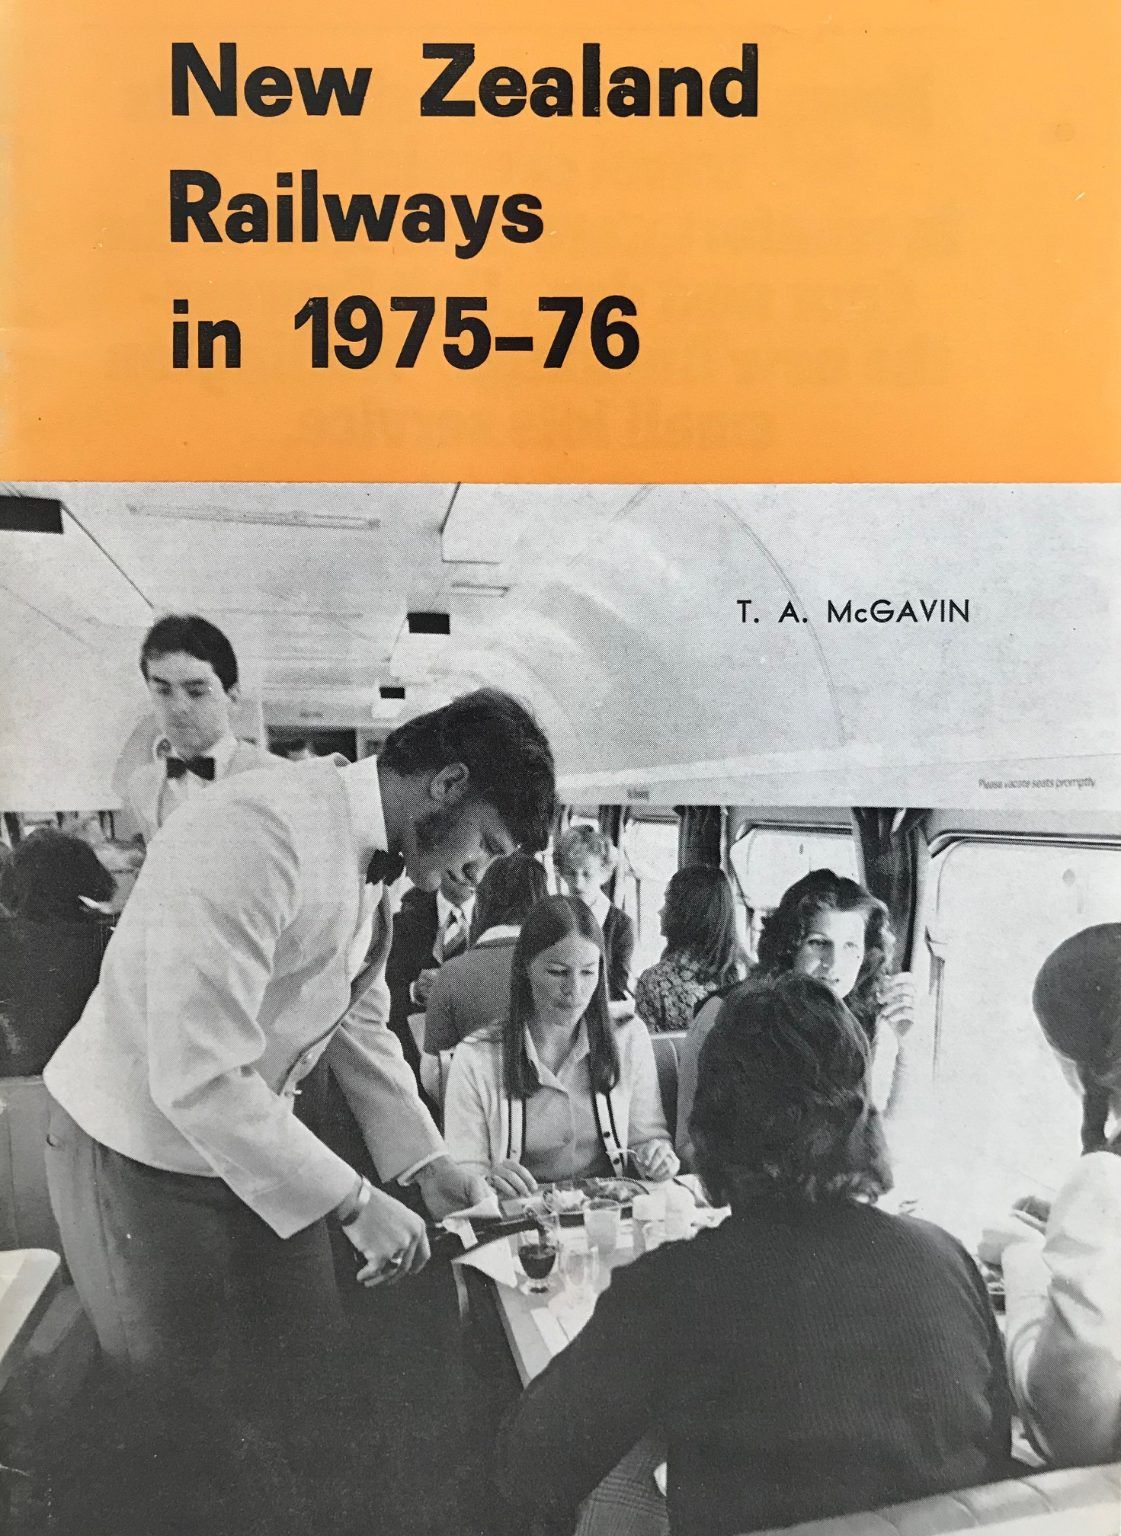 NEW ZEALAND RAILWAYS IN 1975-76